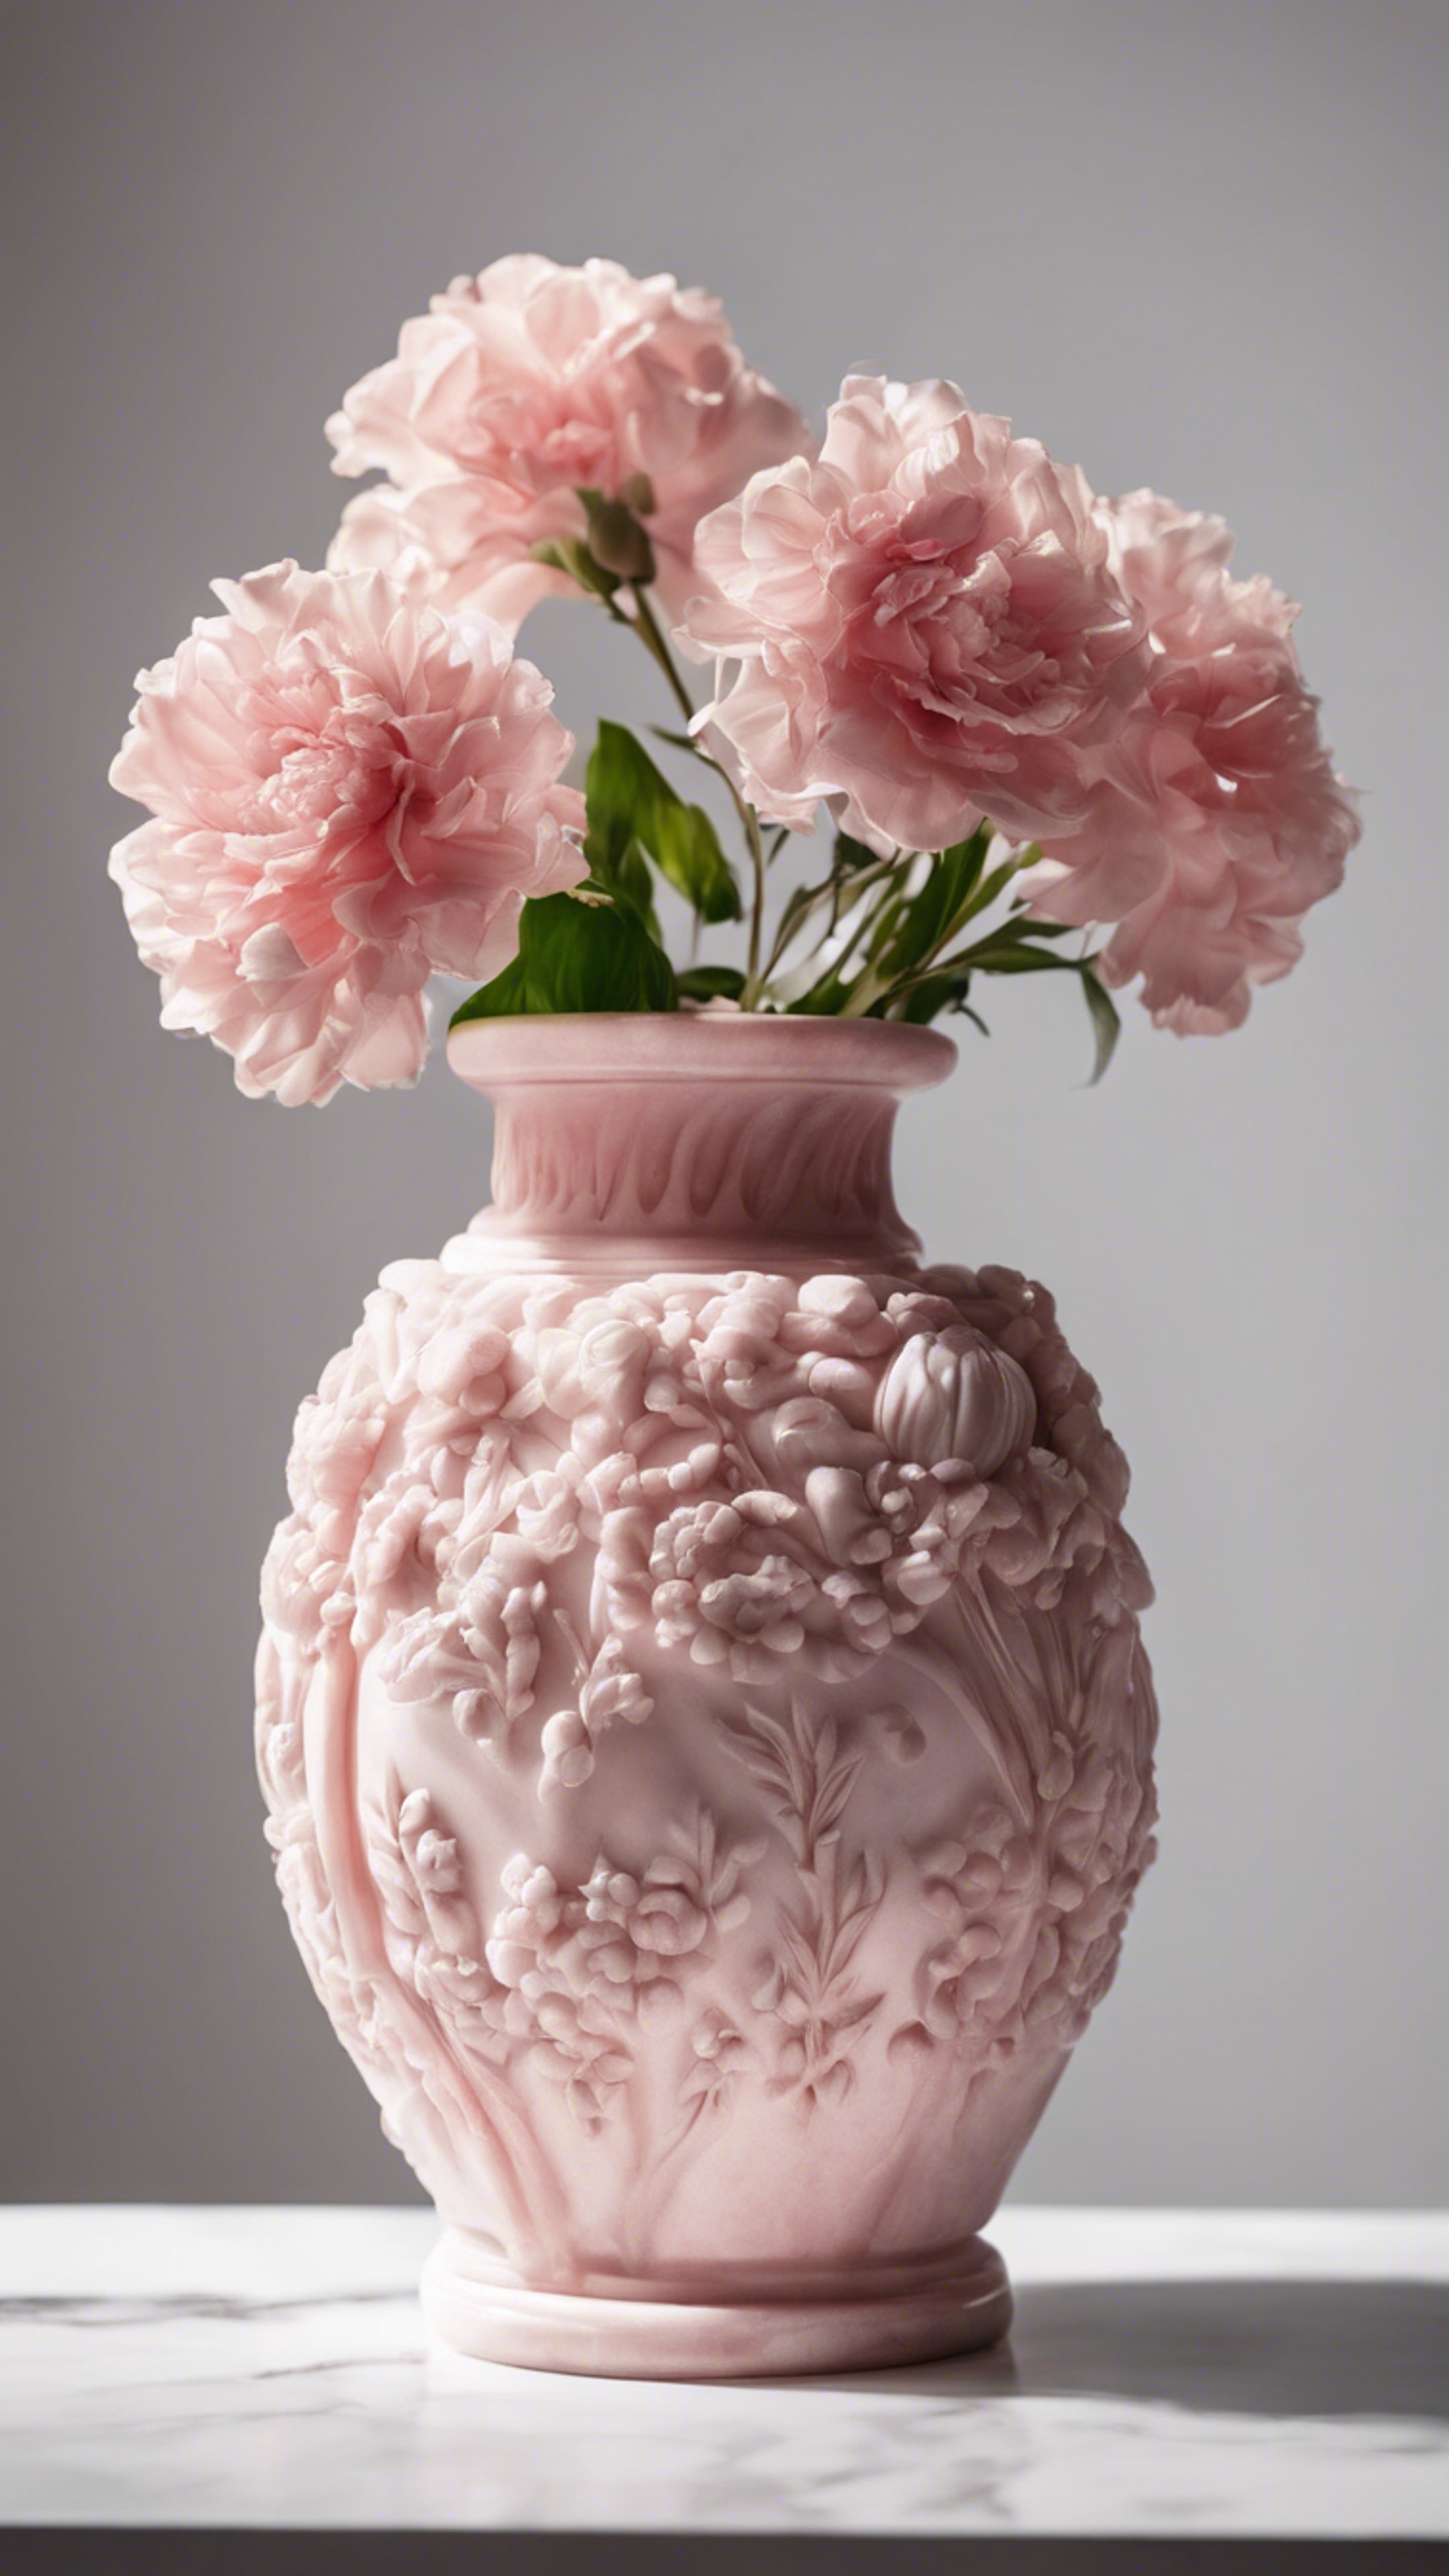 Elegantly carved pink marble flower vase against a white background. Kertas dinding[b14a0bd2340d44aeb9d9]